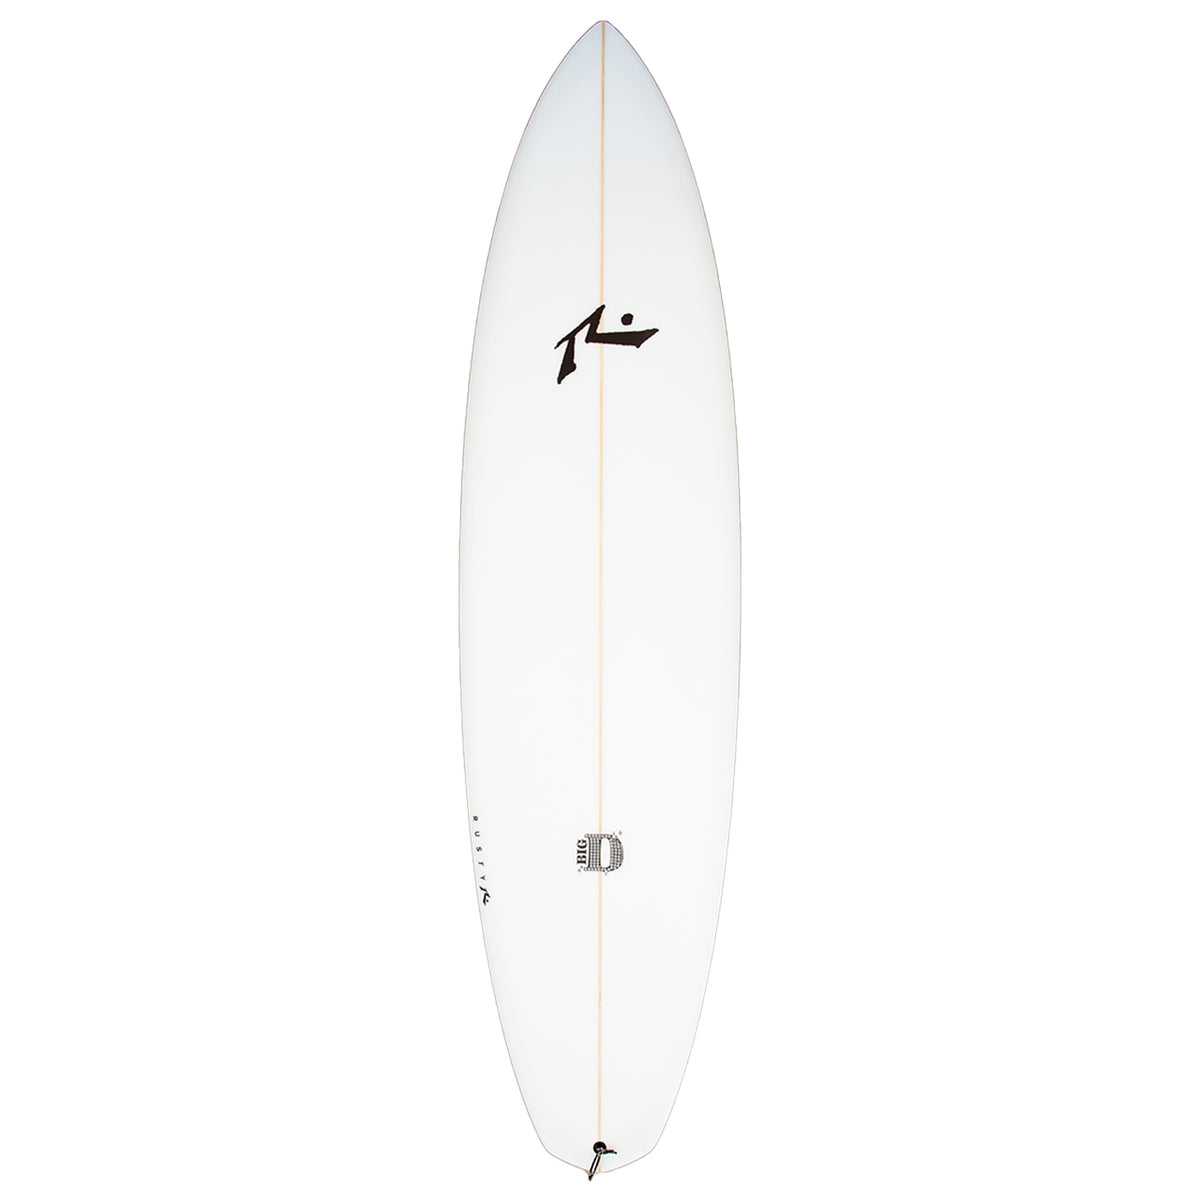 Big D Midlength Surfboard Deck View - Rusty Surfboards 